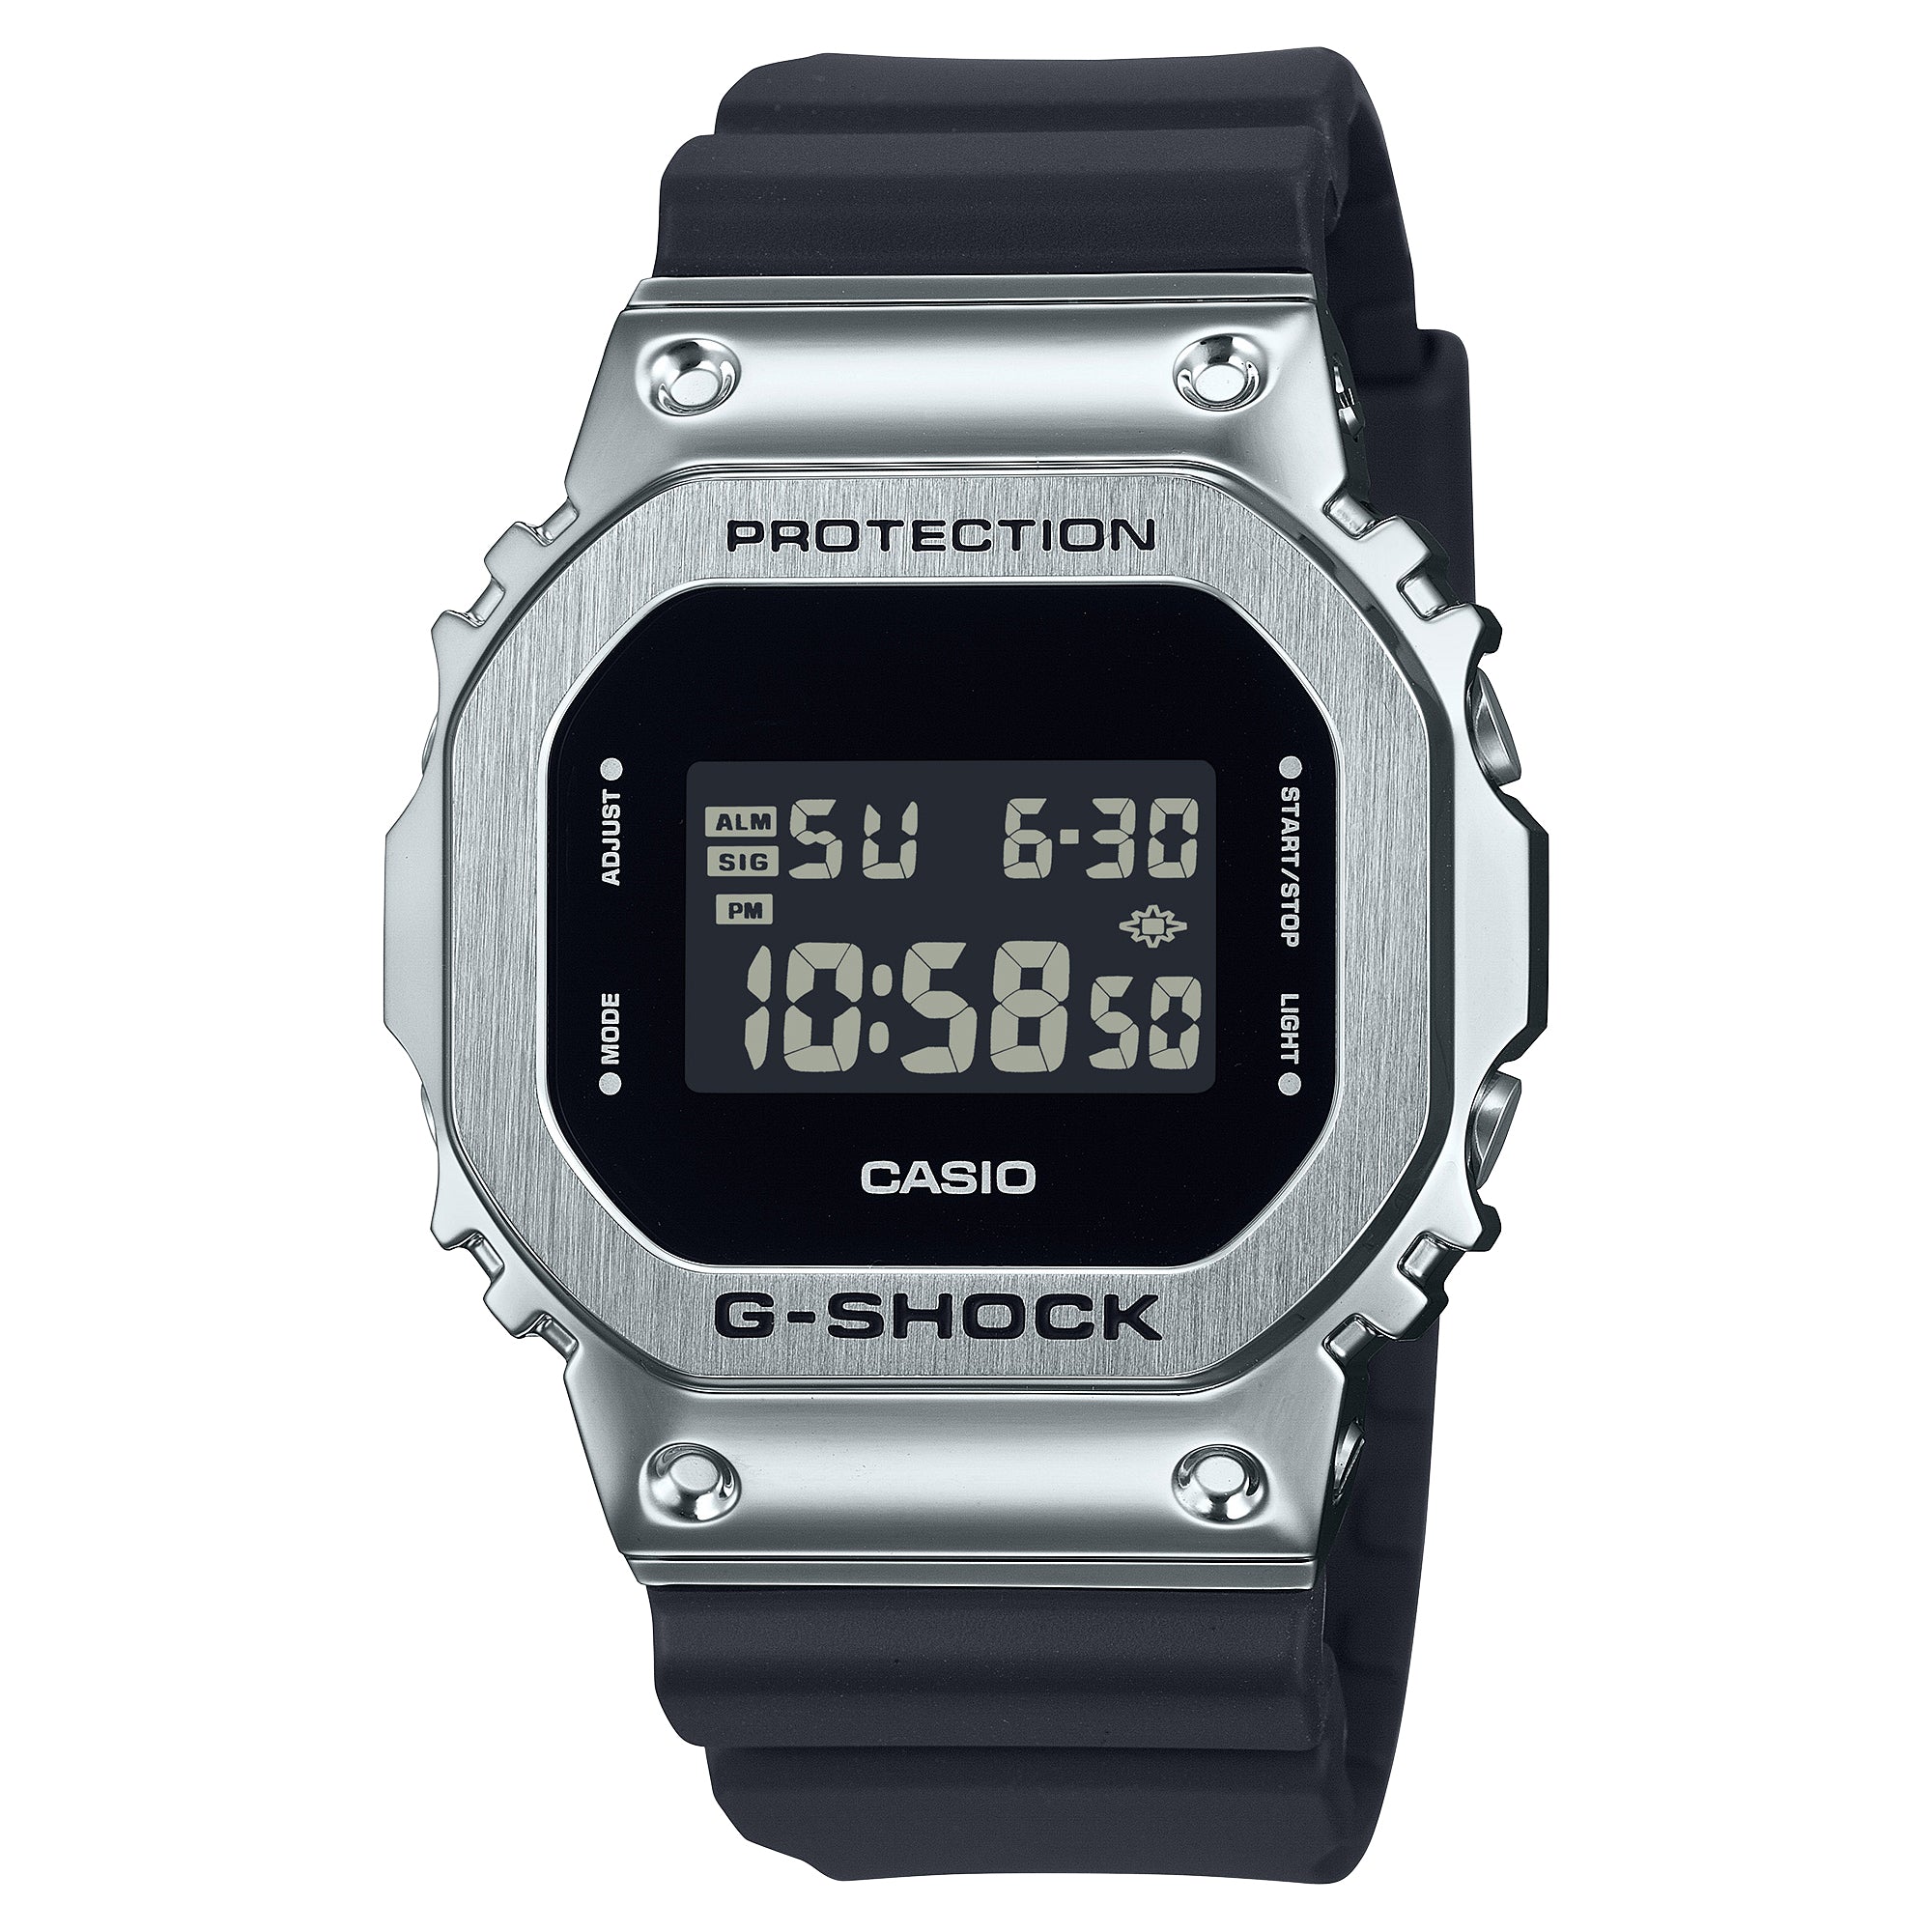 Casio G-Shock GM-5600 Lineup Black Resin Band Watch GM5600U-1D GM-5600U-1D GM-5600U-1